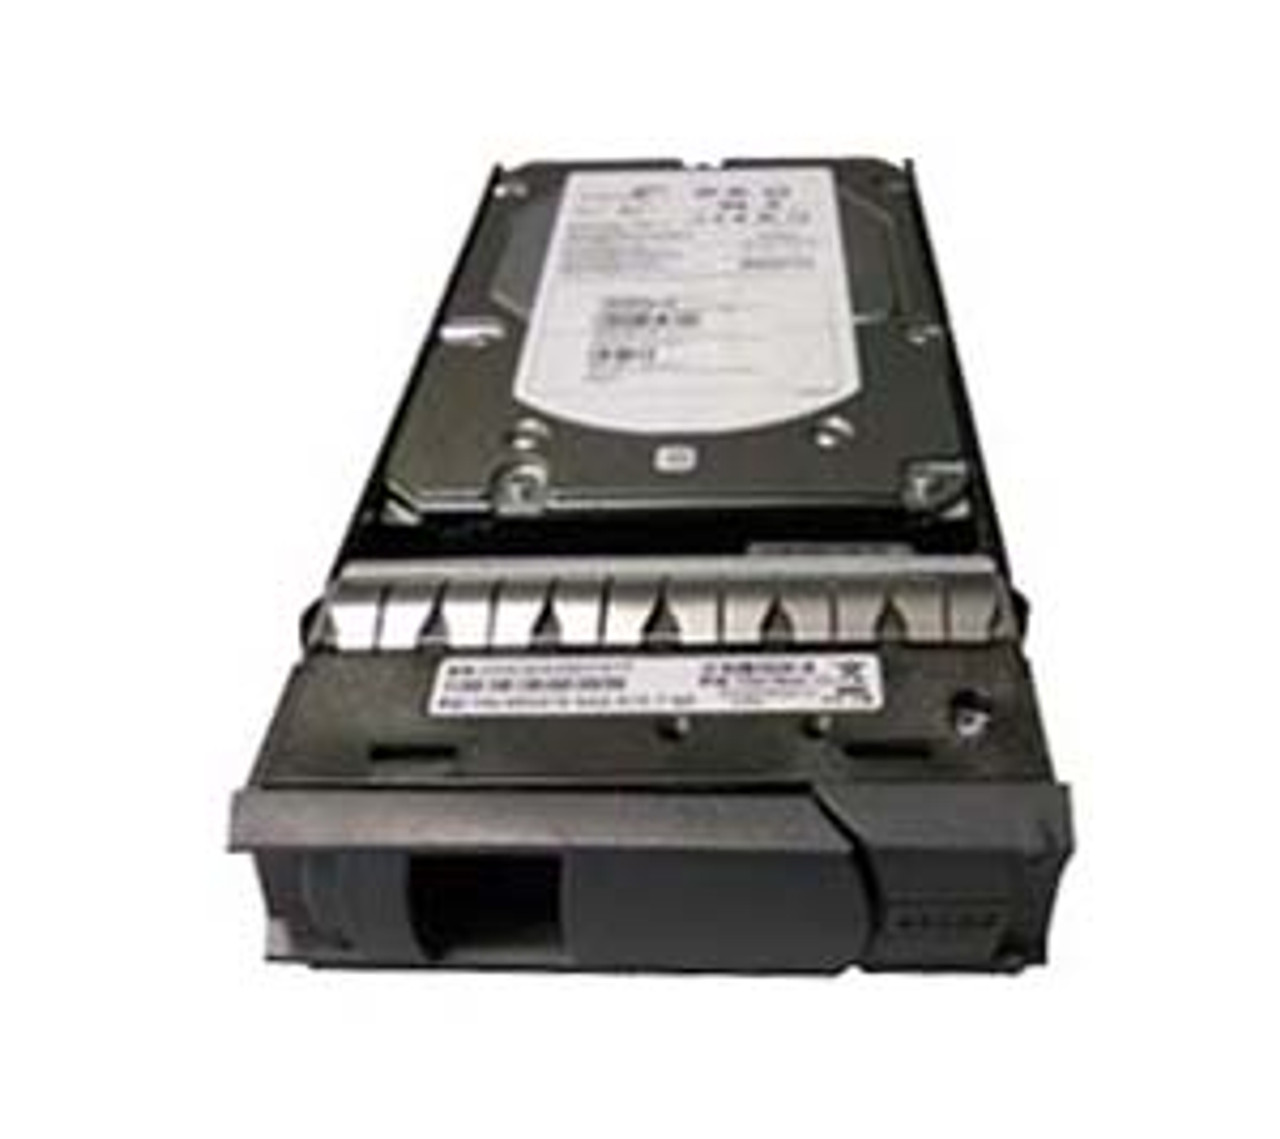 00AJ087 - IBM 1TB 7200RPM 2.5-inch NL SAS 6GB/s G3 Hot Swapable Hard Drive with Tray